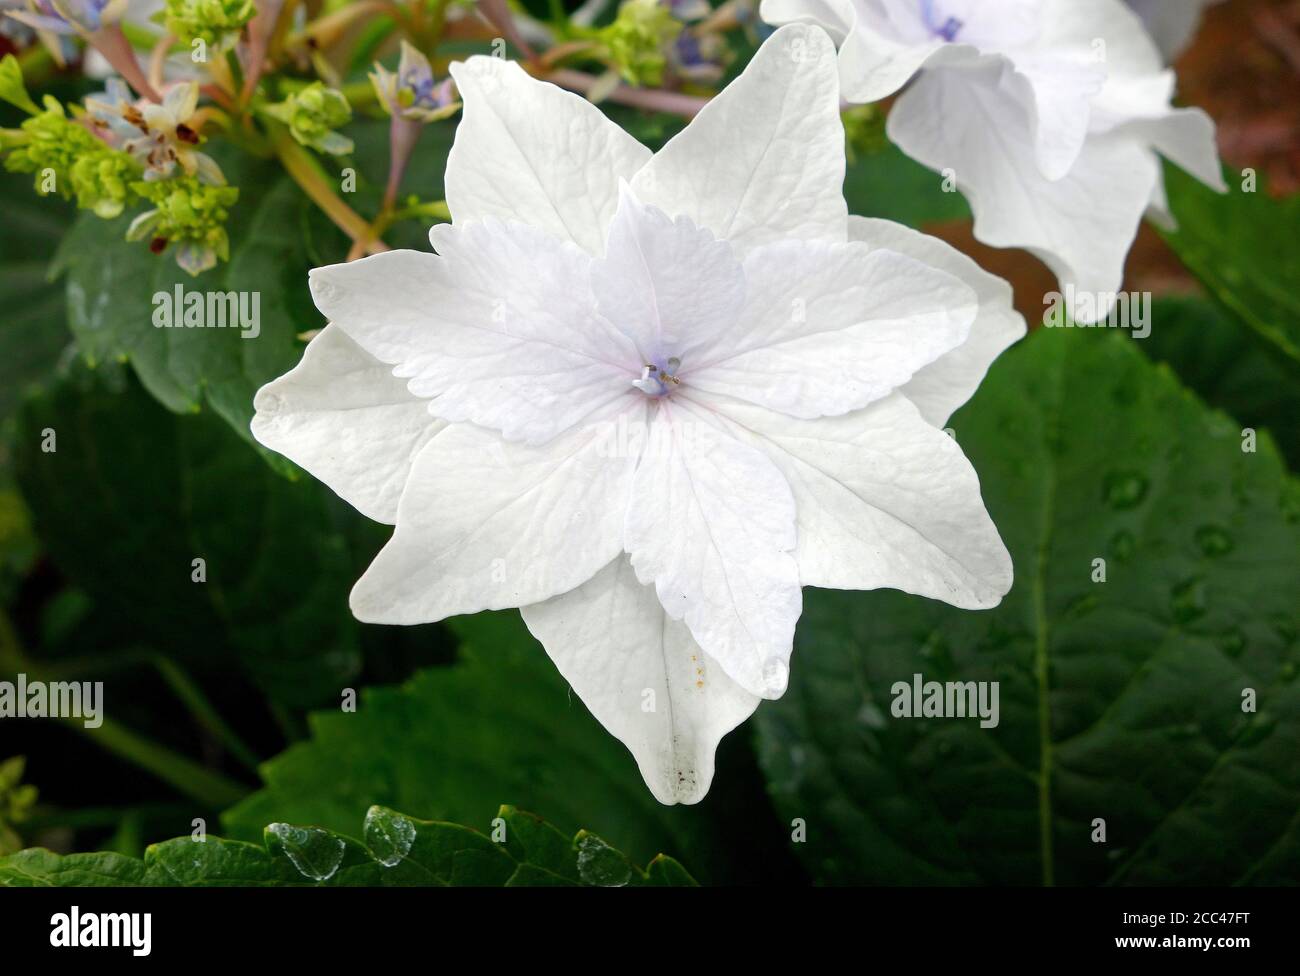 Top view shot of beautiful white Browallia Stock Photo